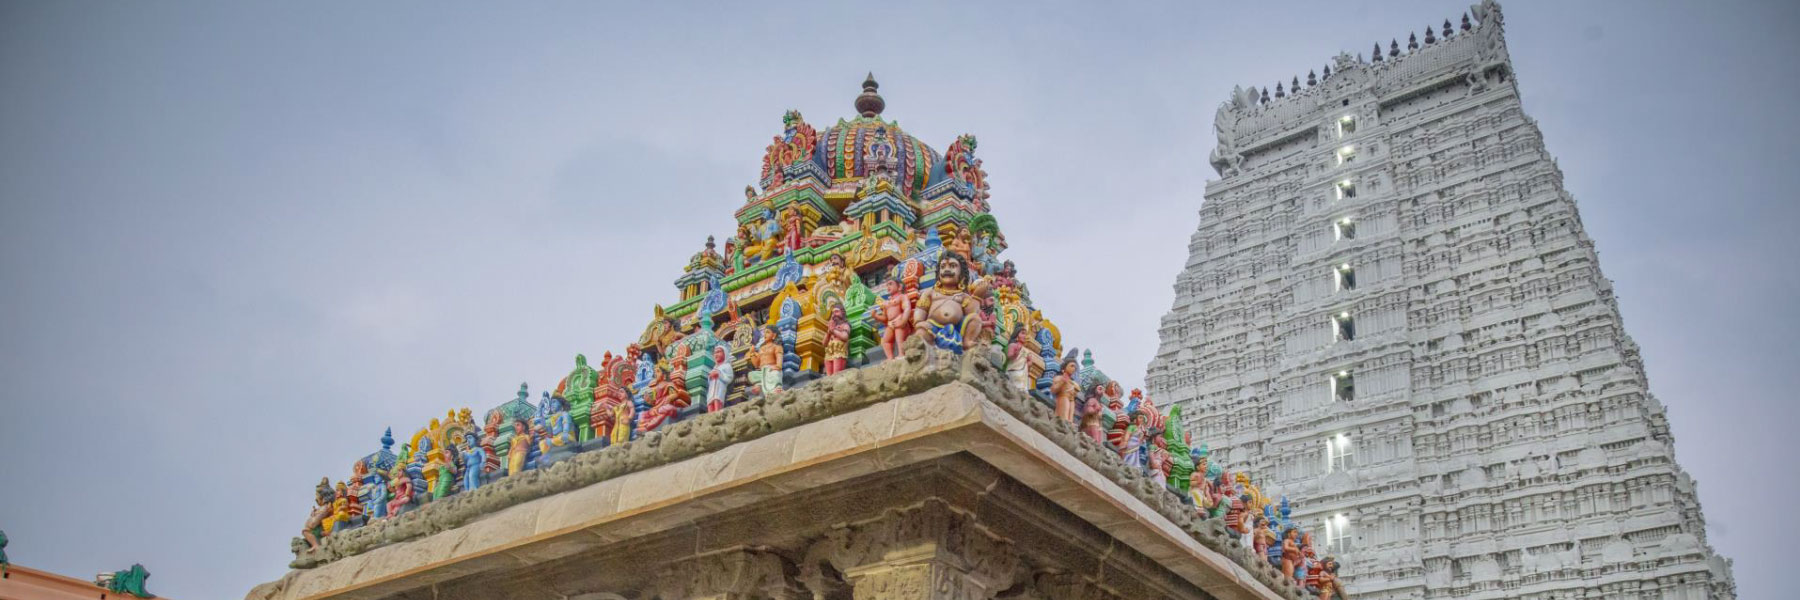 Arunachaleswarar Temple | Incredible India